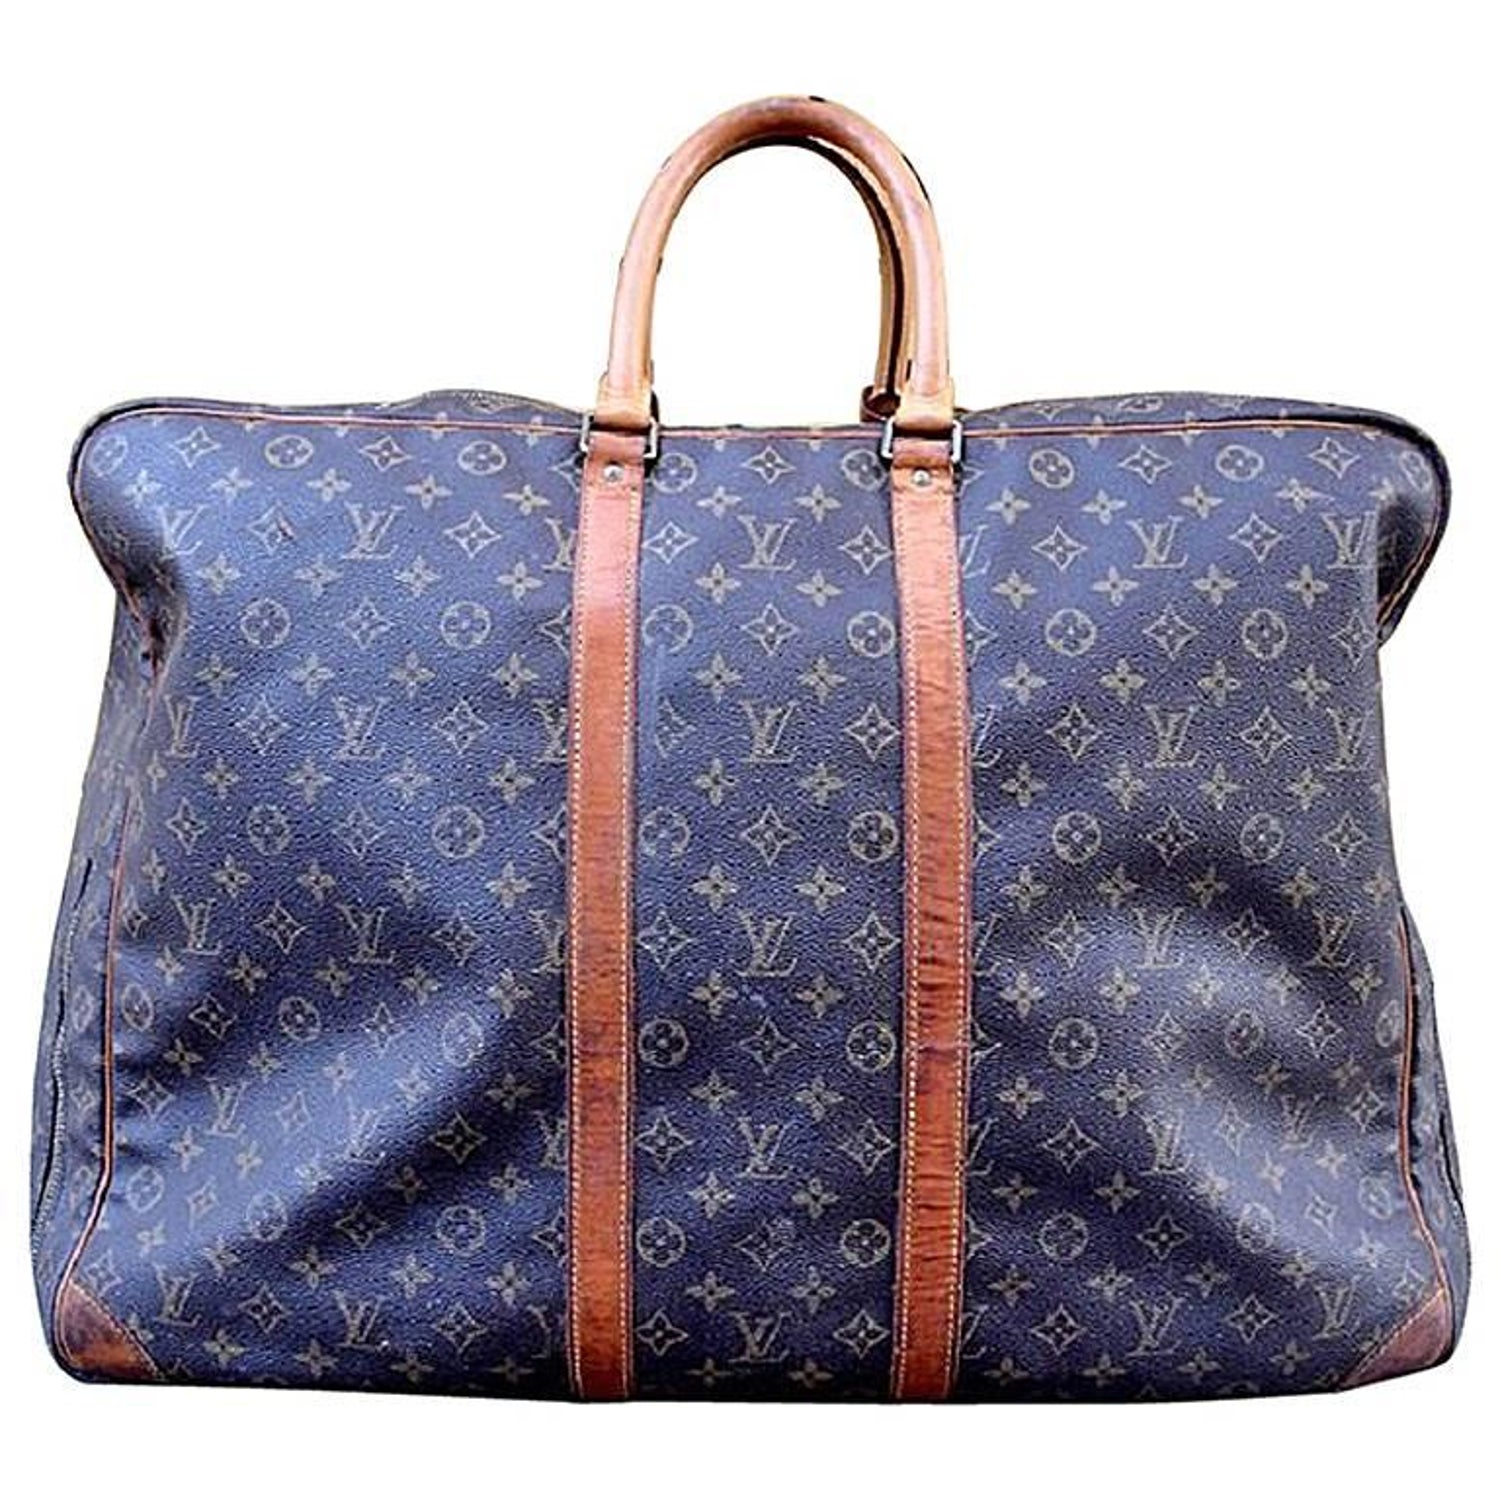 1960s Louis Vuitton Monogram Travel Bag Special Made for Saks